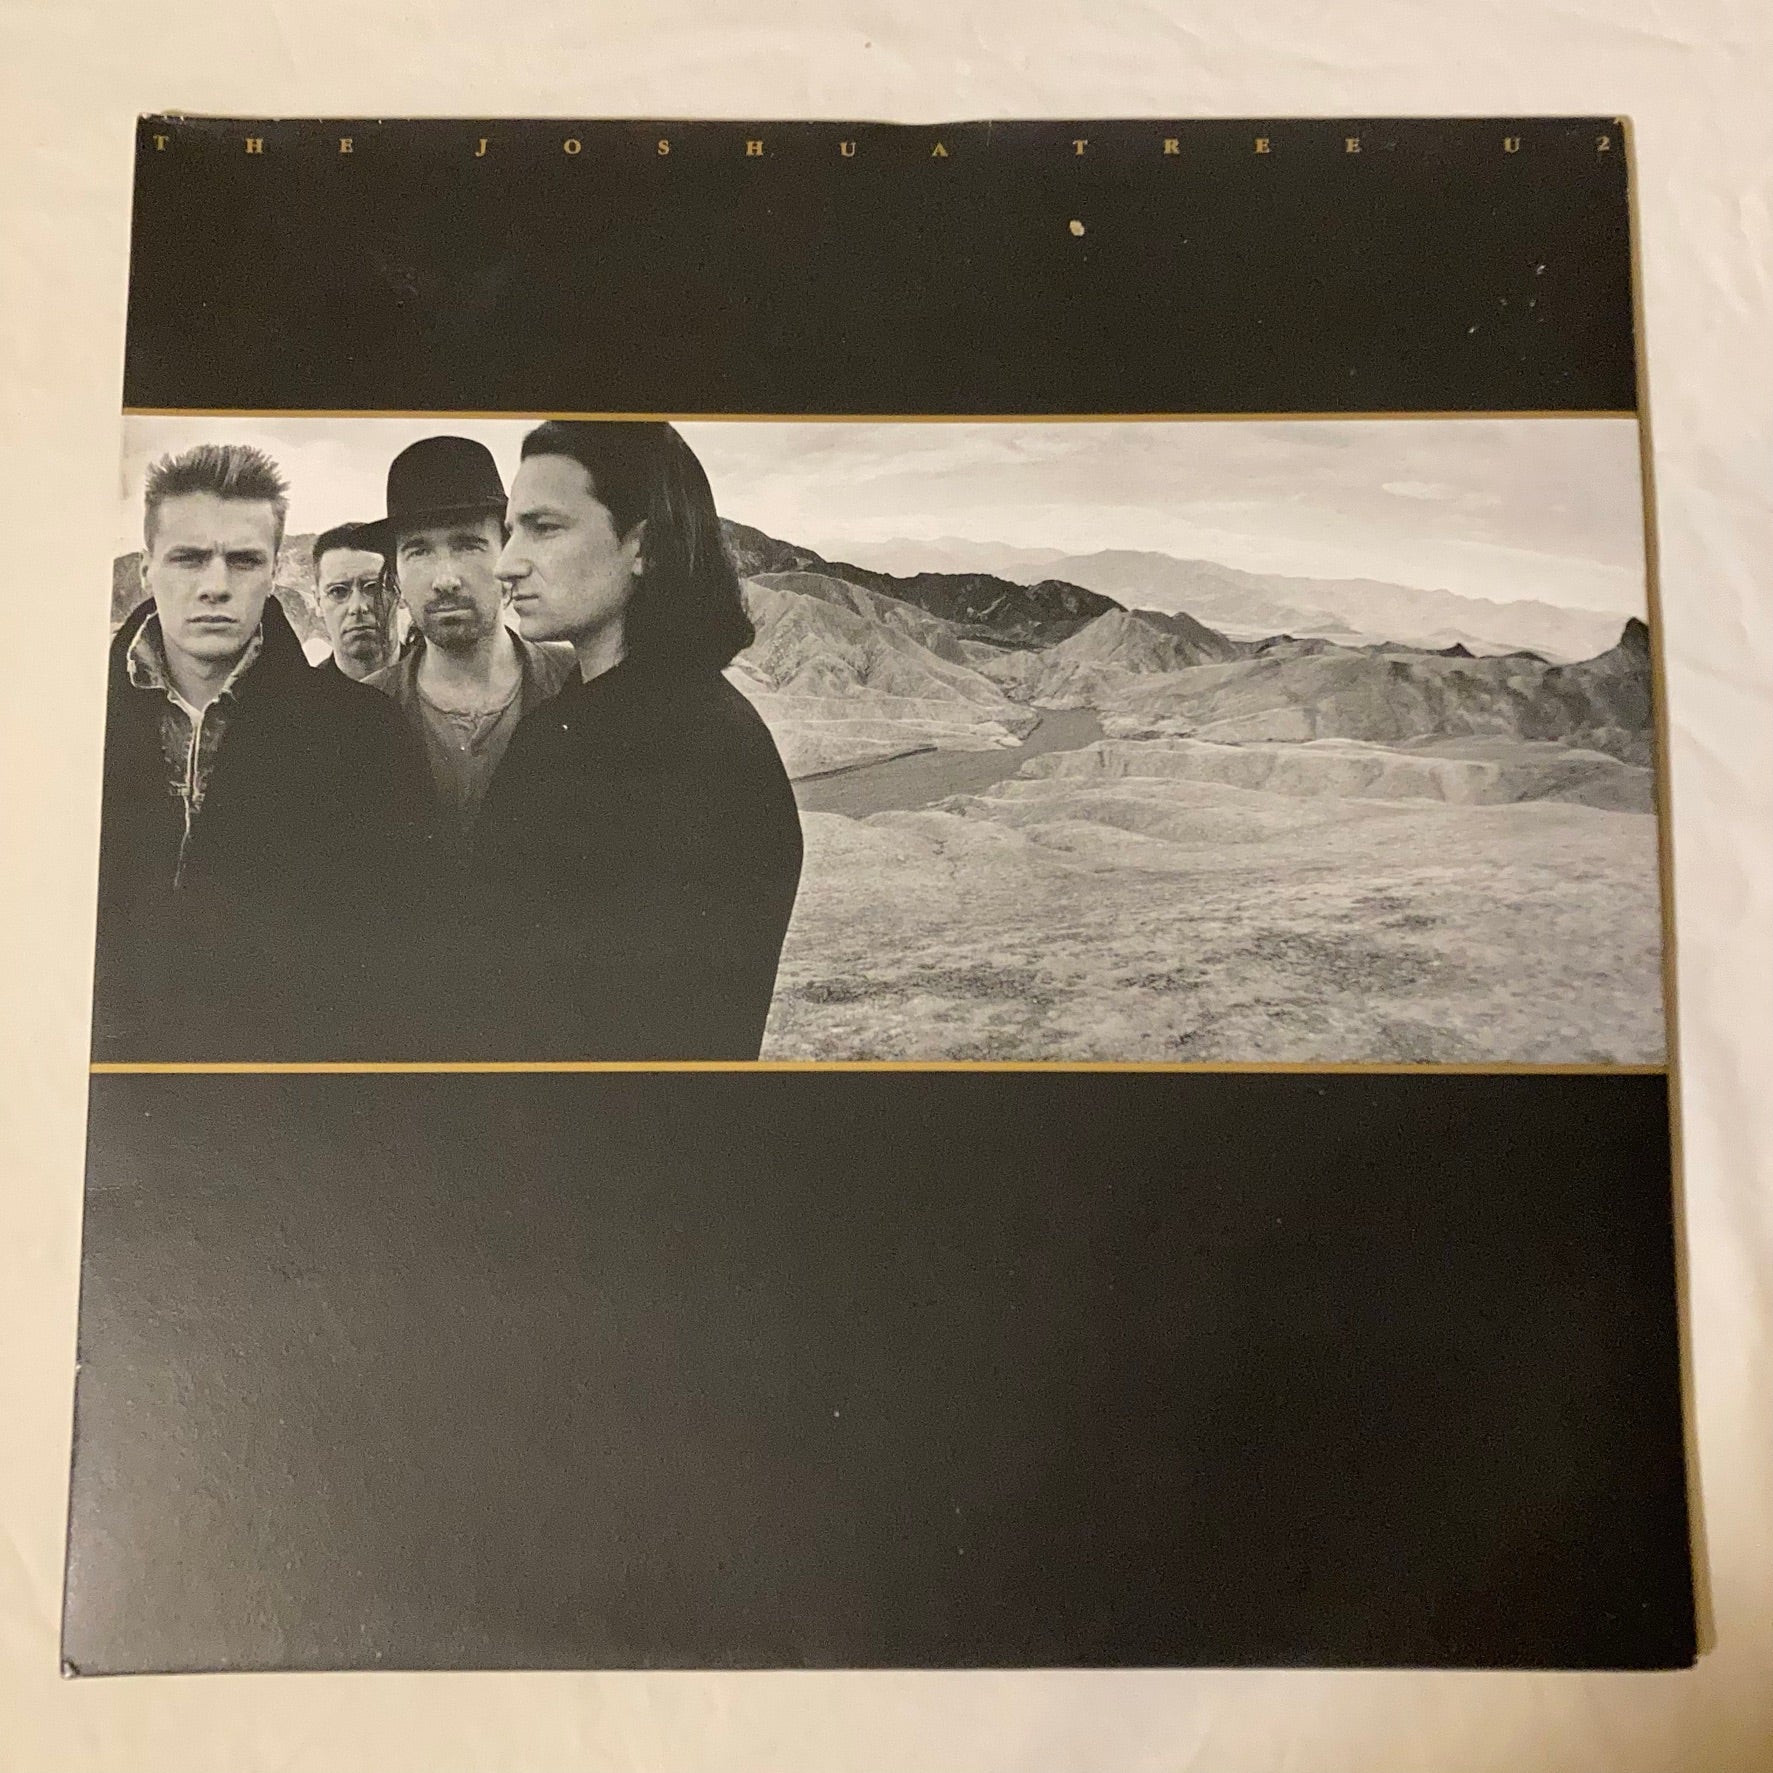 U2 - The Joshua Tree Original vinyl album w/poster